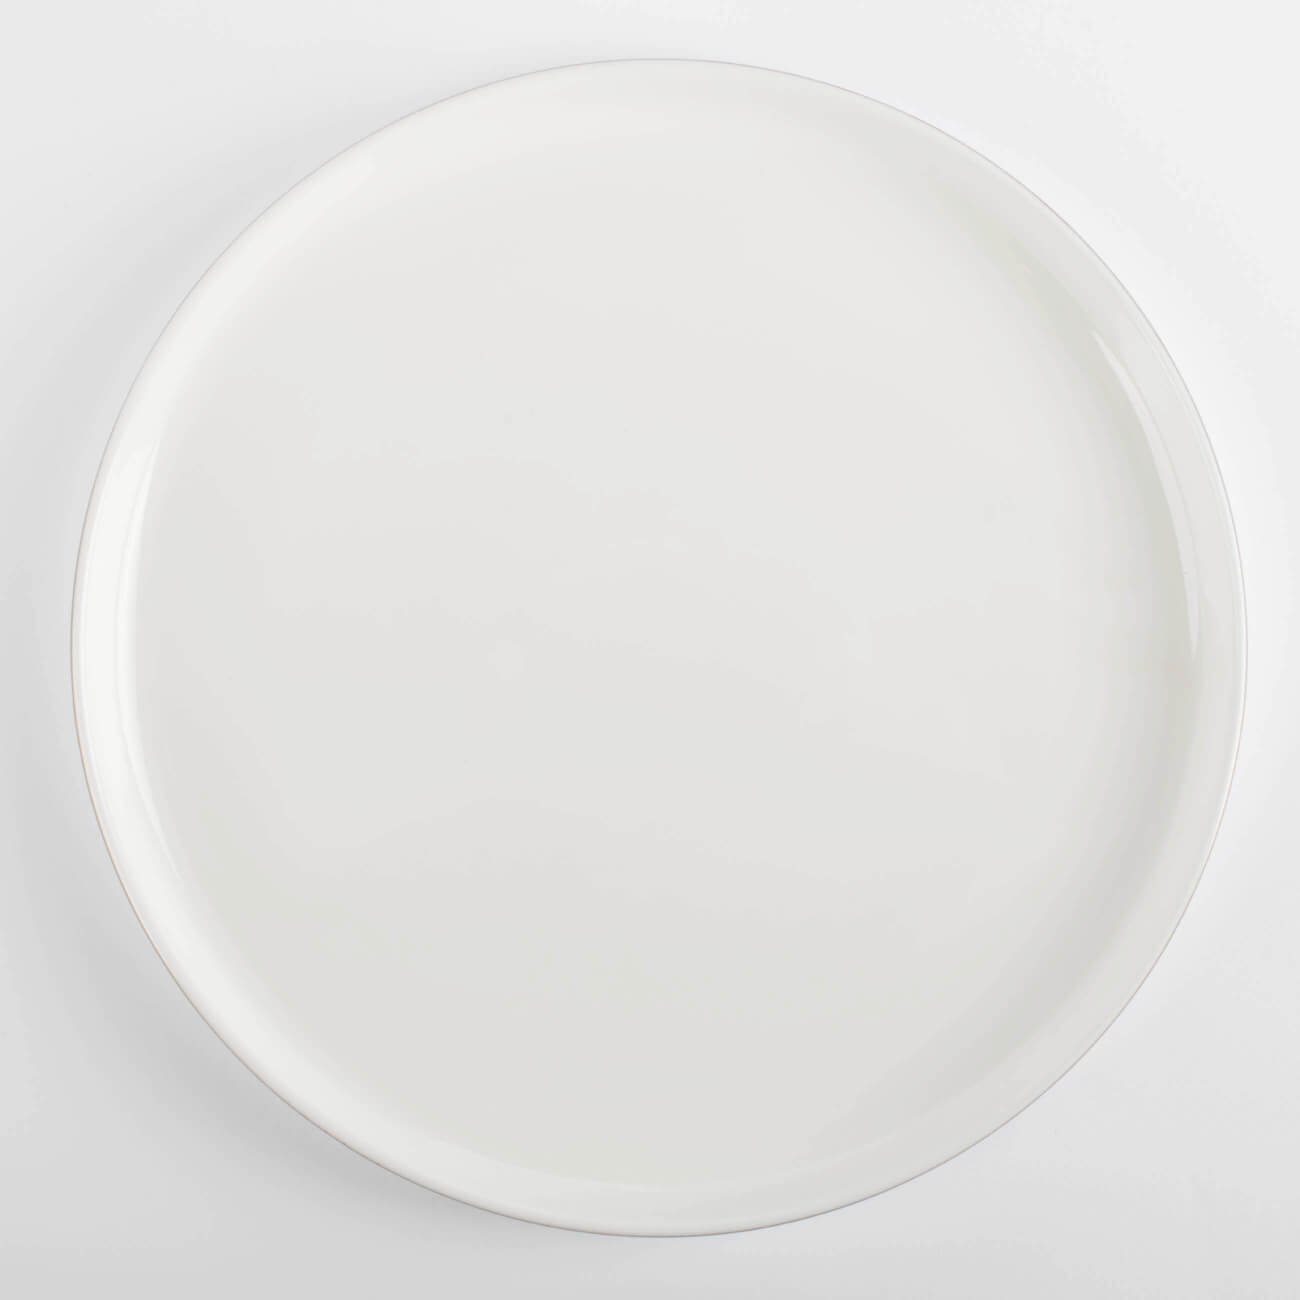 Тарелка обеденная, 26 см, фарфор F, белая, Ideal gold тарелка обеденная white rabbit щелкунчик 26 5 см